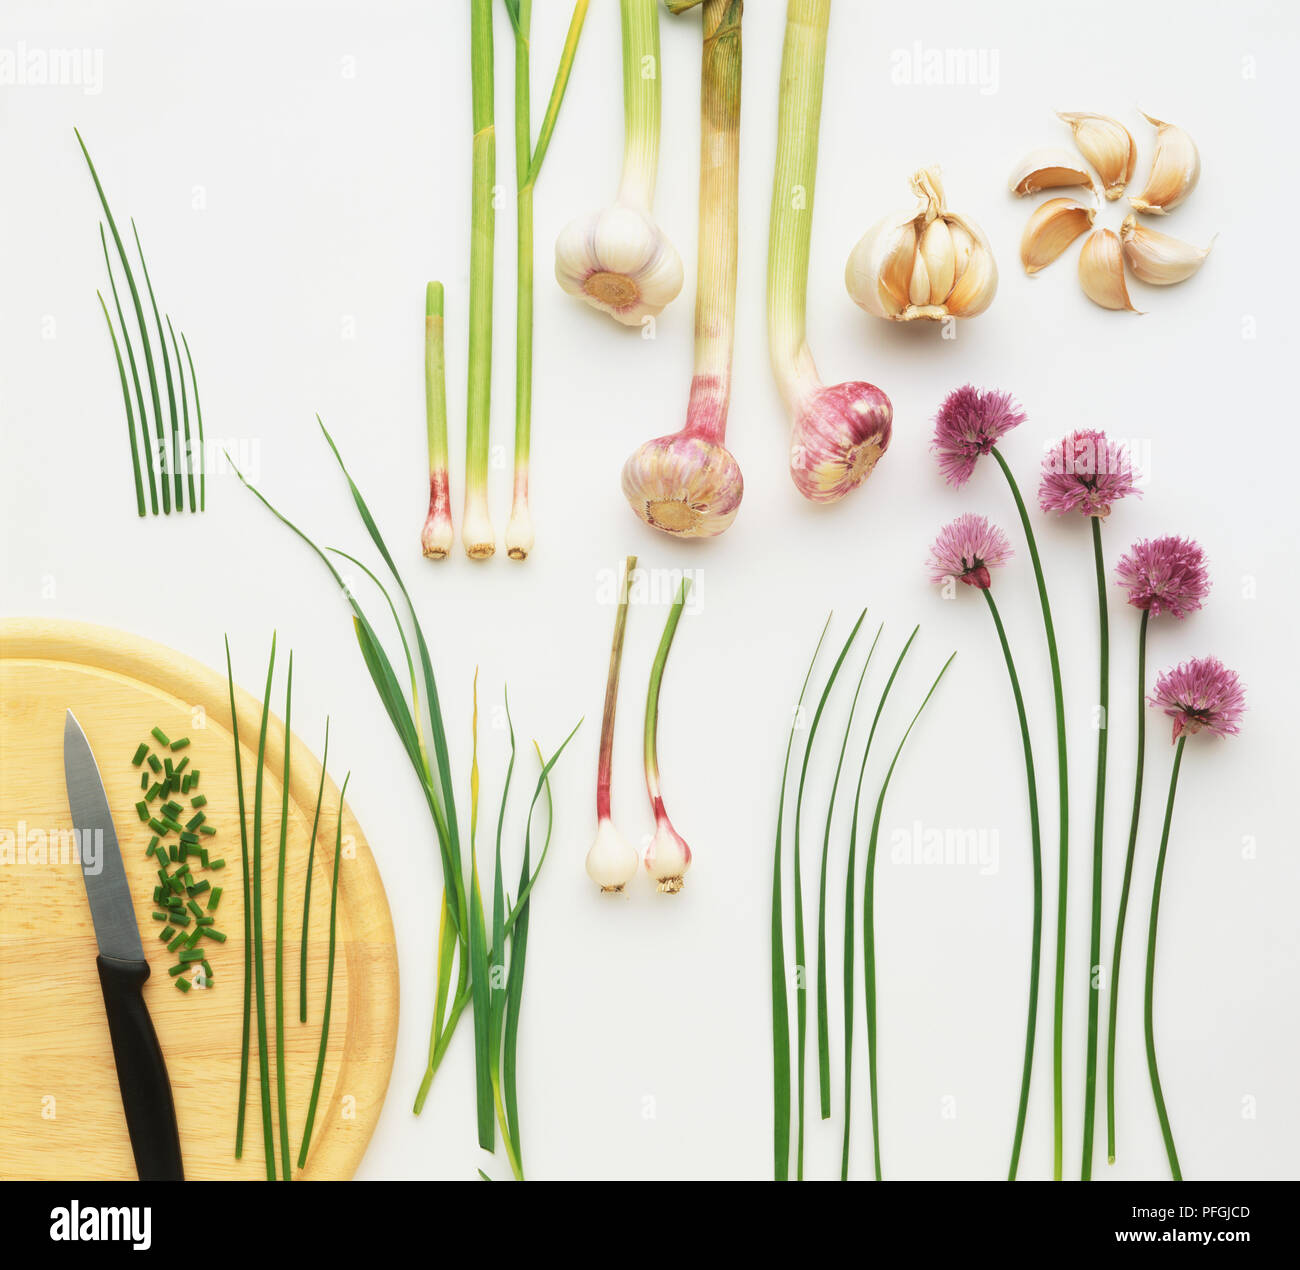 Allium sp., varieties of Chive, Garlic and Onions Stock Photo